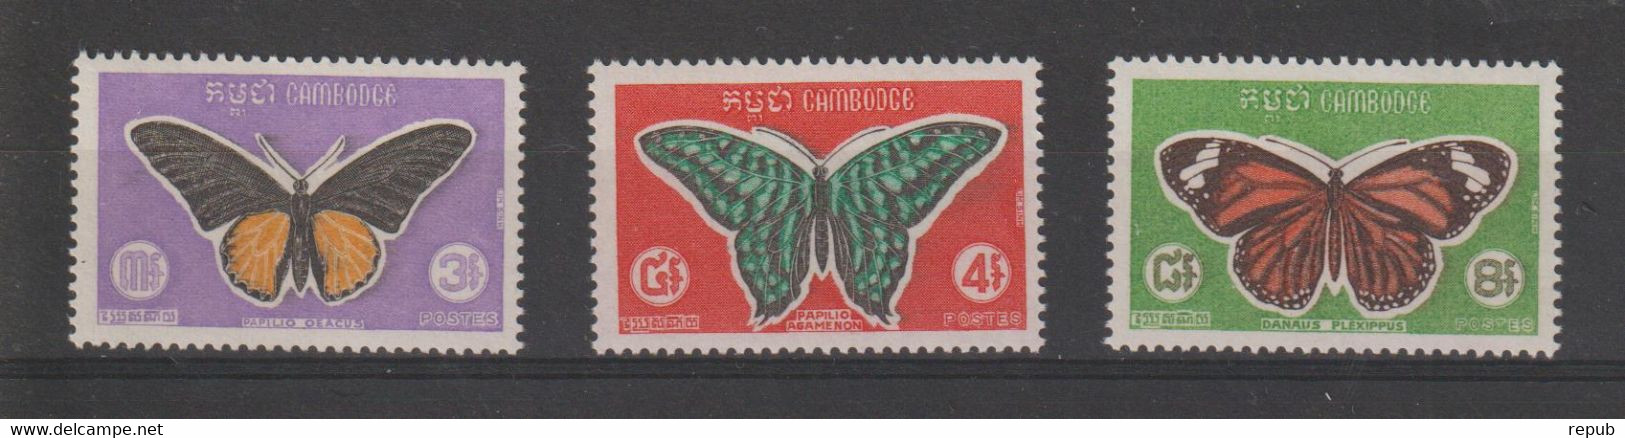 Cambodge 1969 Papillons 225-227, 3 Val ** MNH - Cambodge